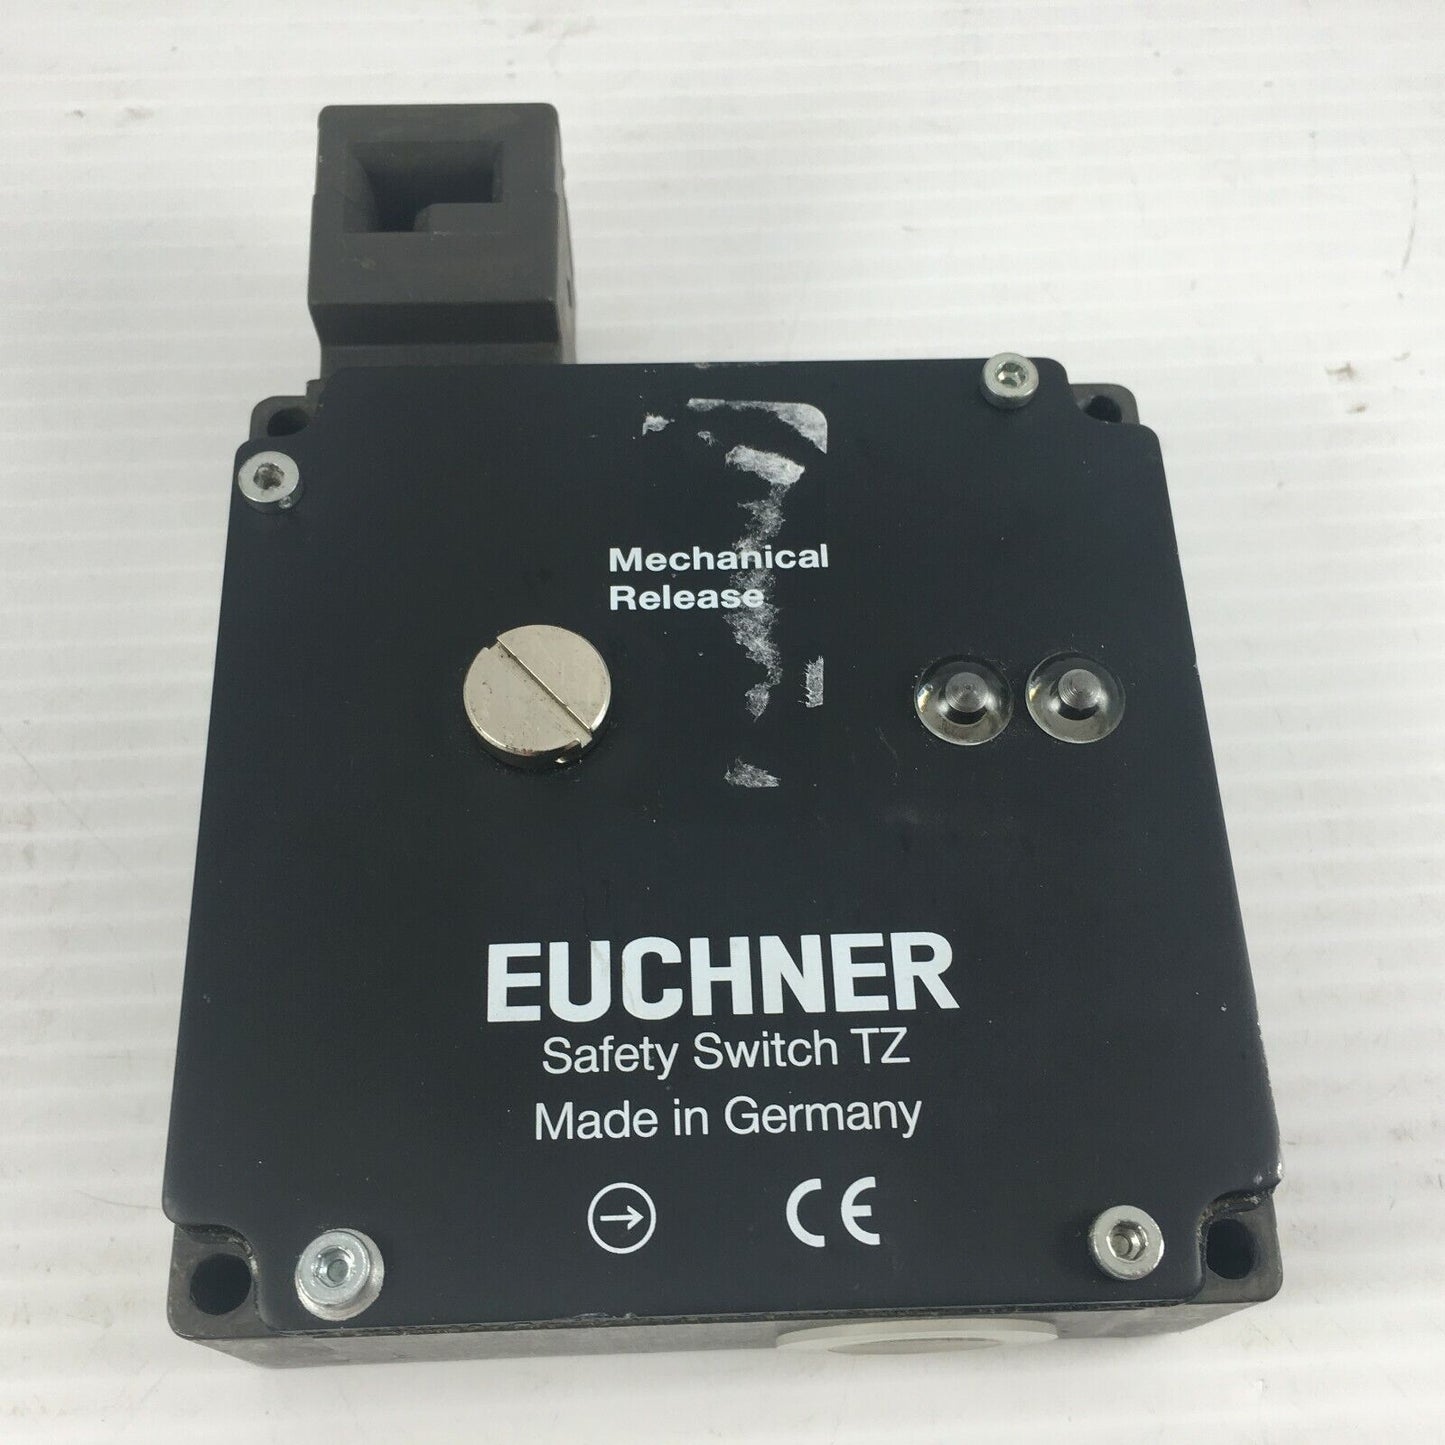 Euchner TZ1LE024M Safety Switch